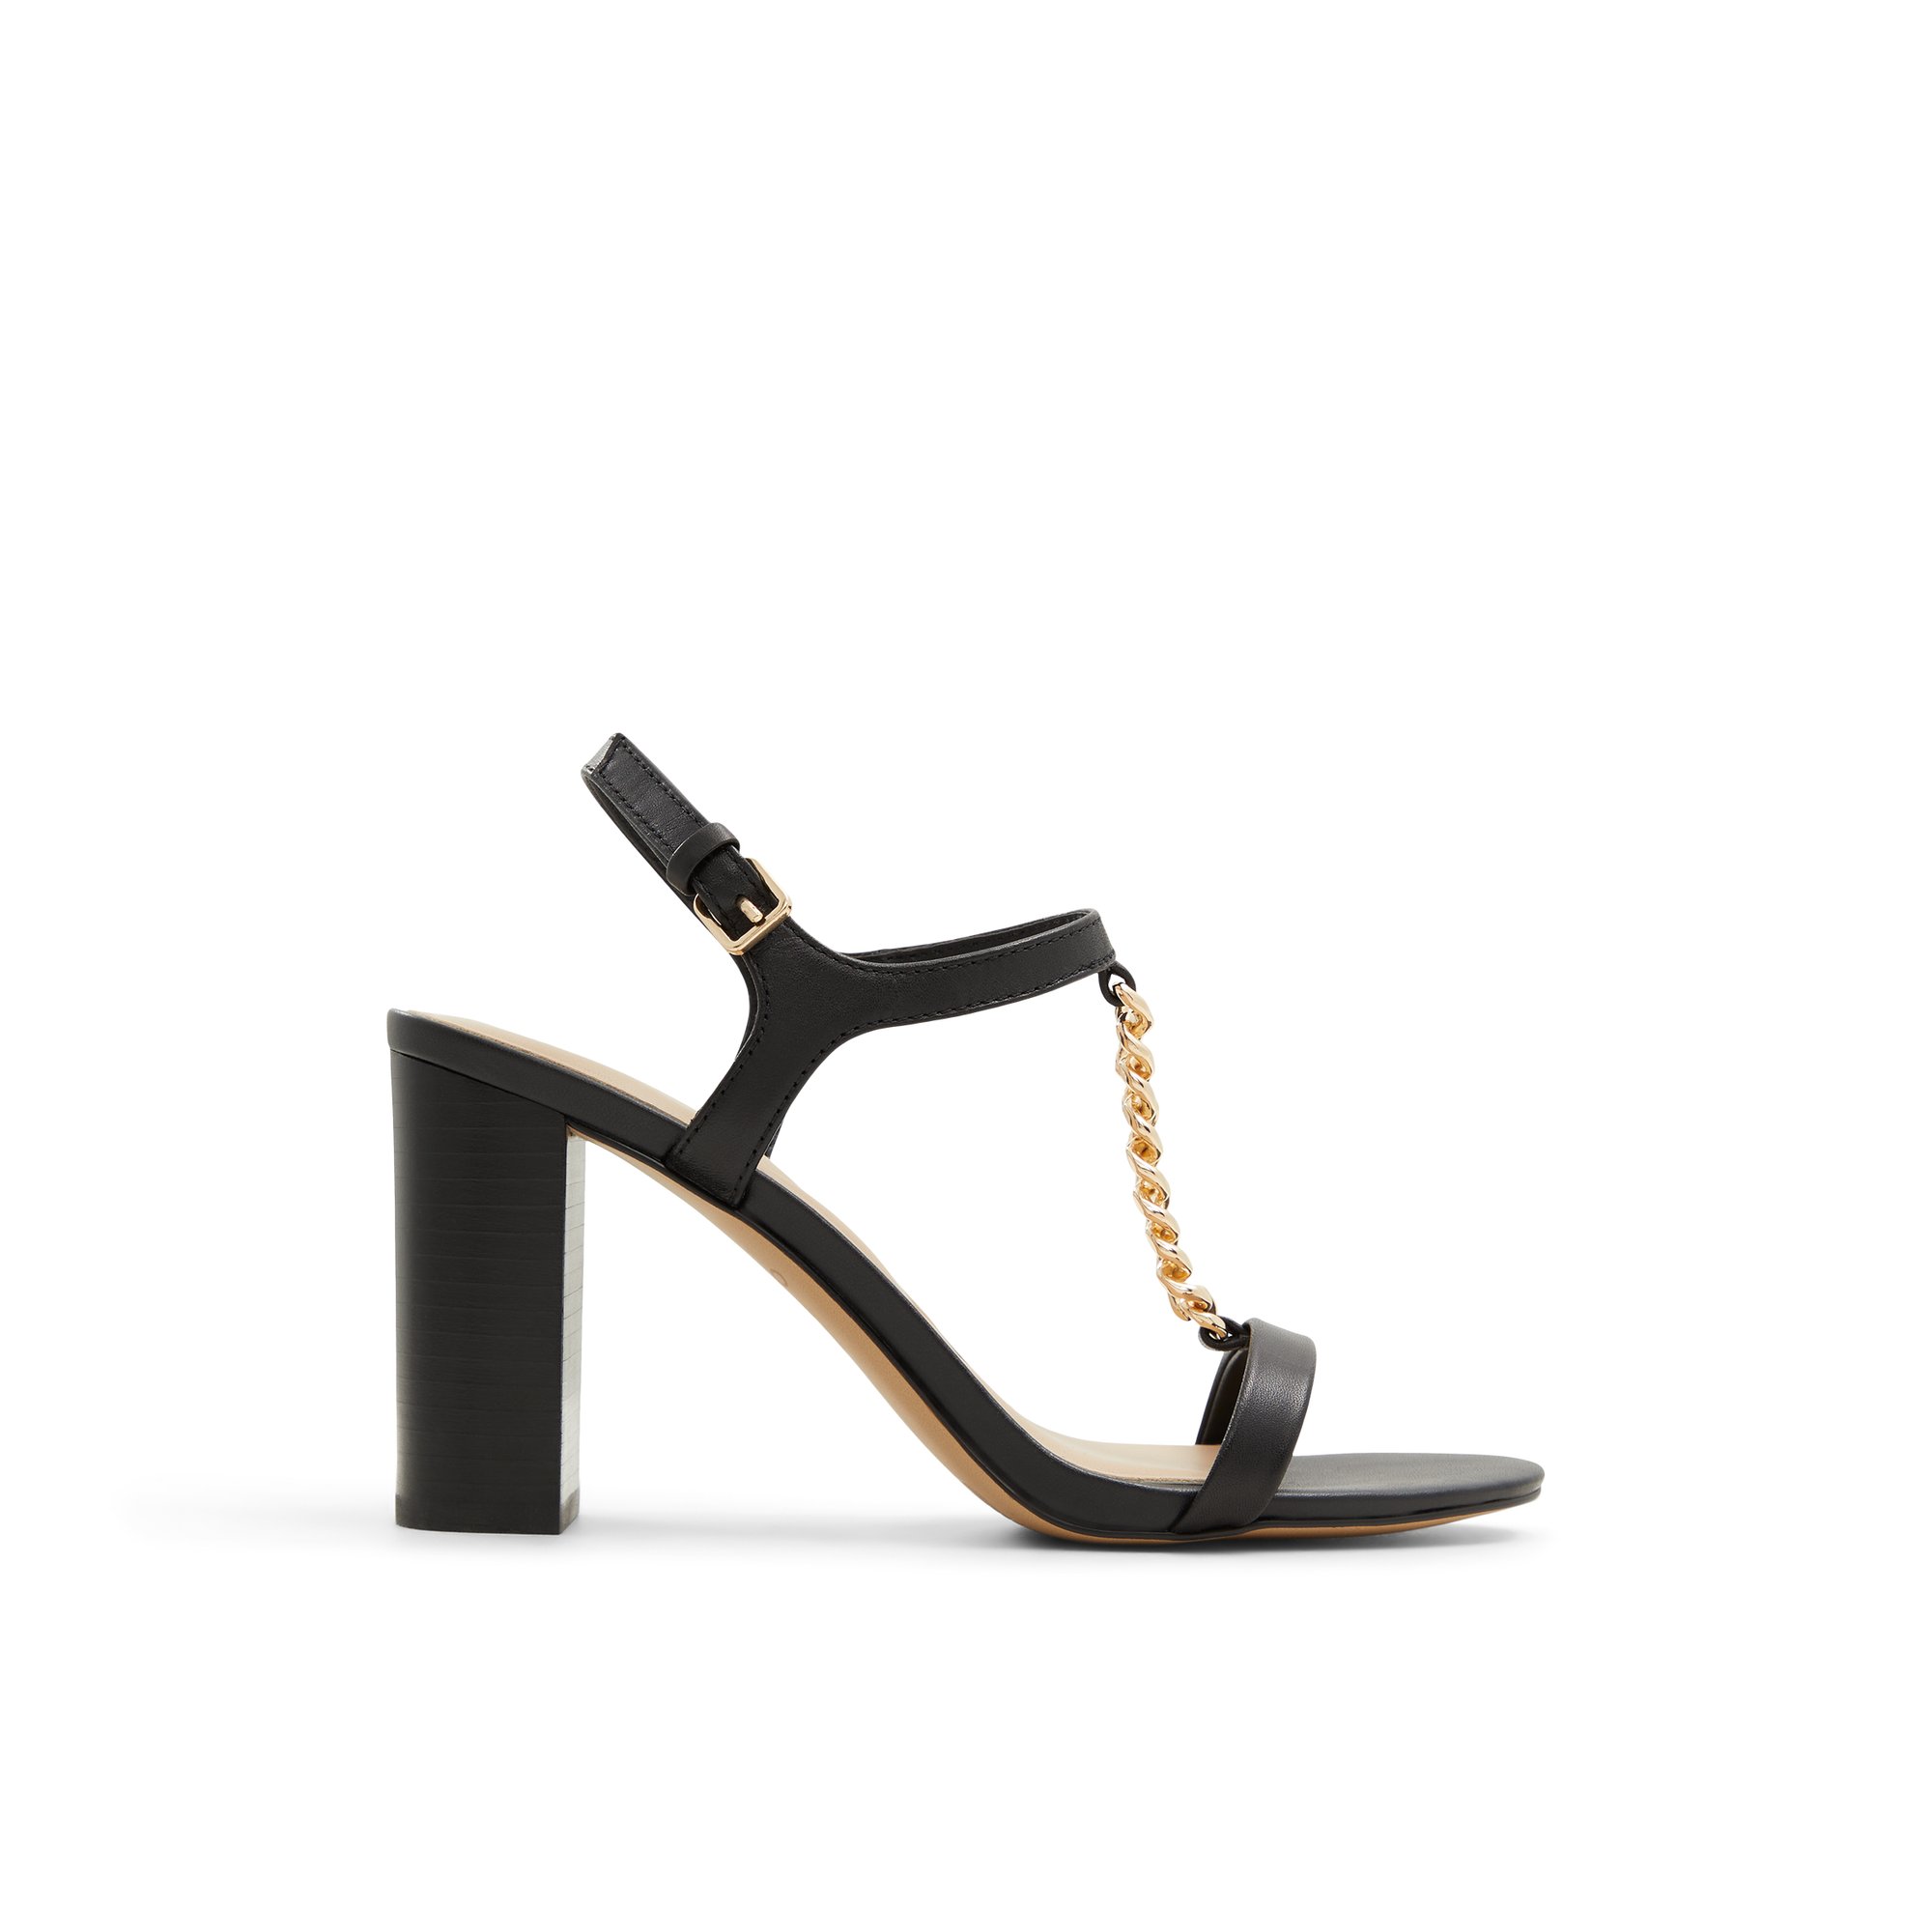 ALDO Clelia - Women's Sandals Strappy - Black